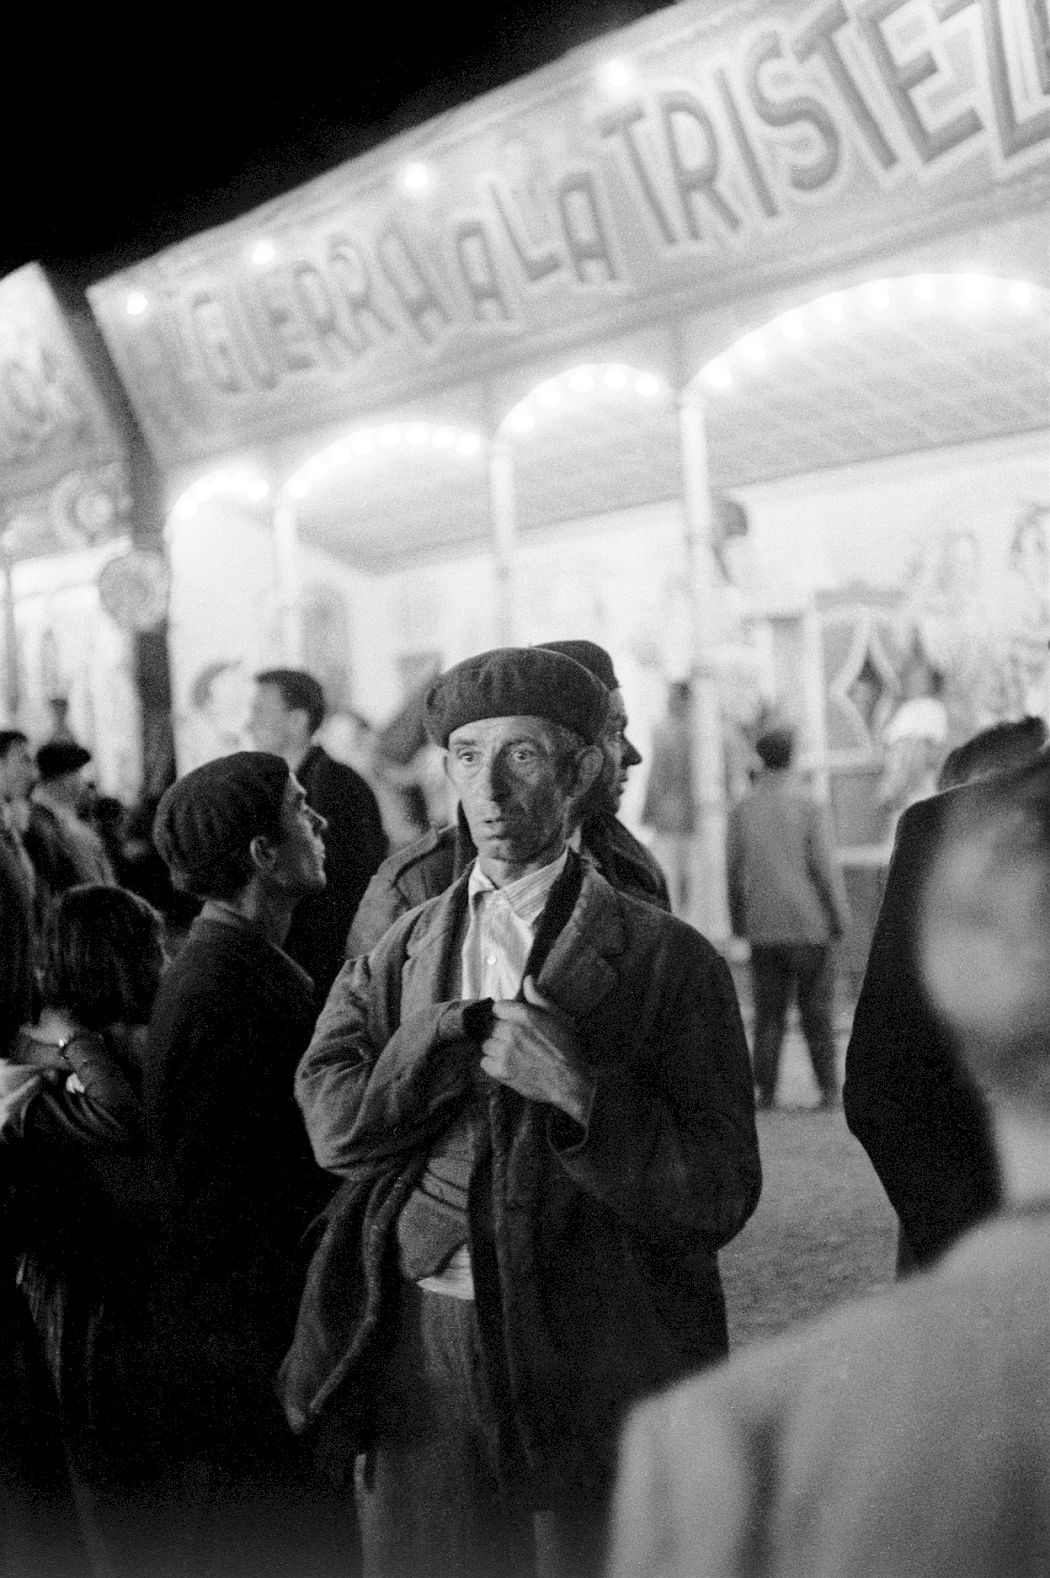 SPAIN. Pamplona. Fairground. During the festival of San Fermin. 1954© Inge Morath / Magnum Photos / courtesy CLAIRbyKahn